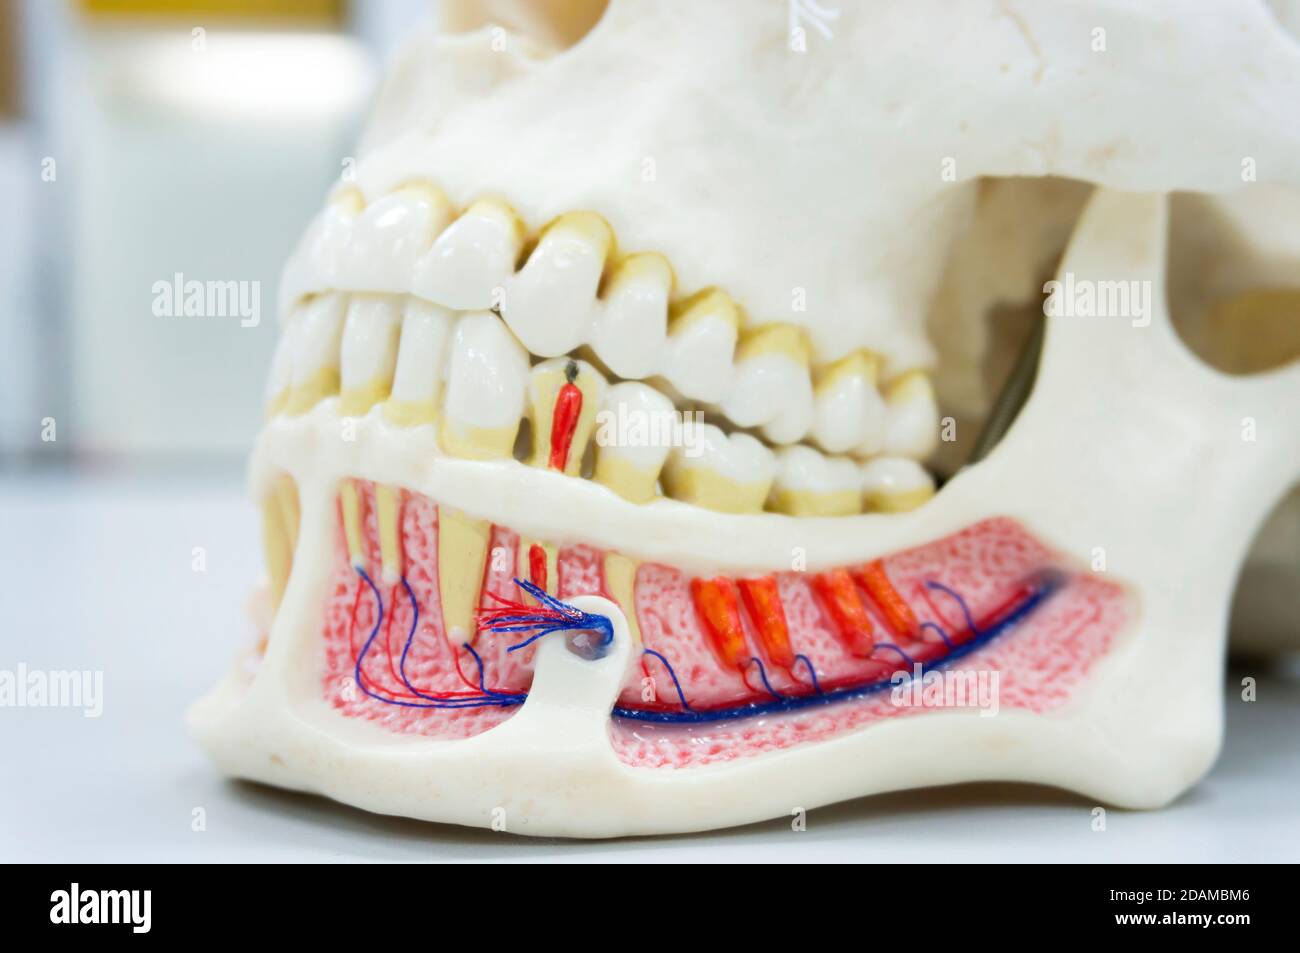 Human jaw anatomy model. Stock Photo